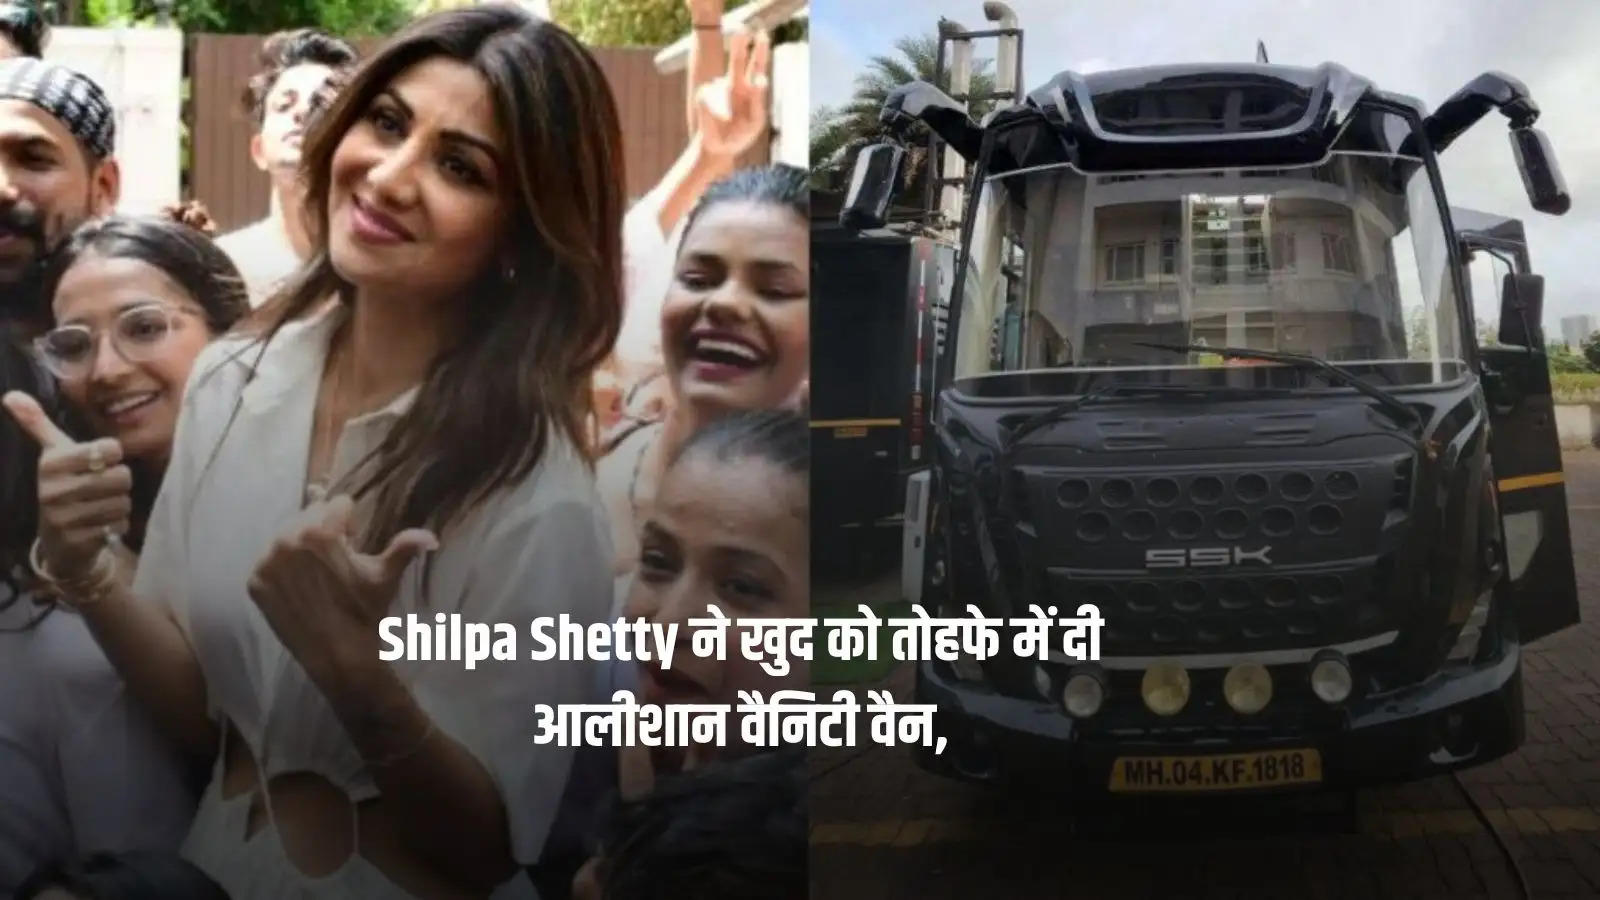 Shilpa Shetty